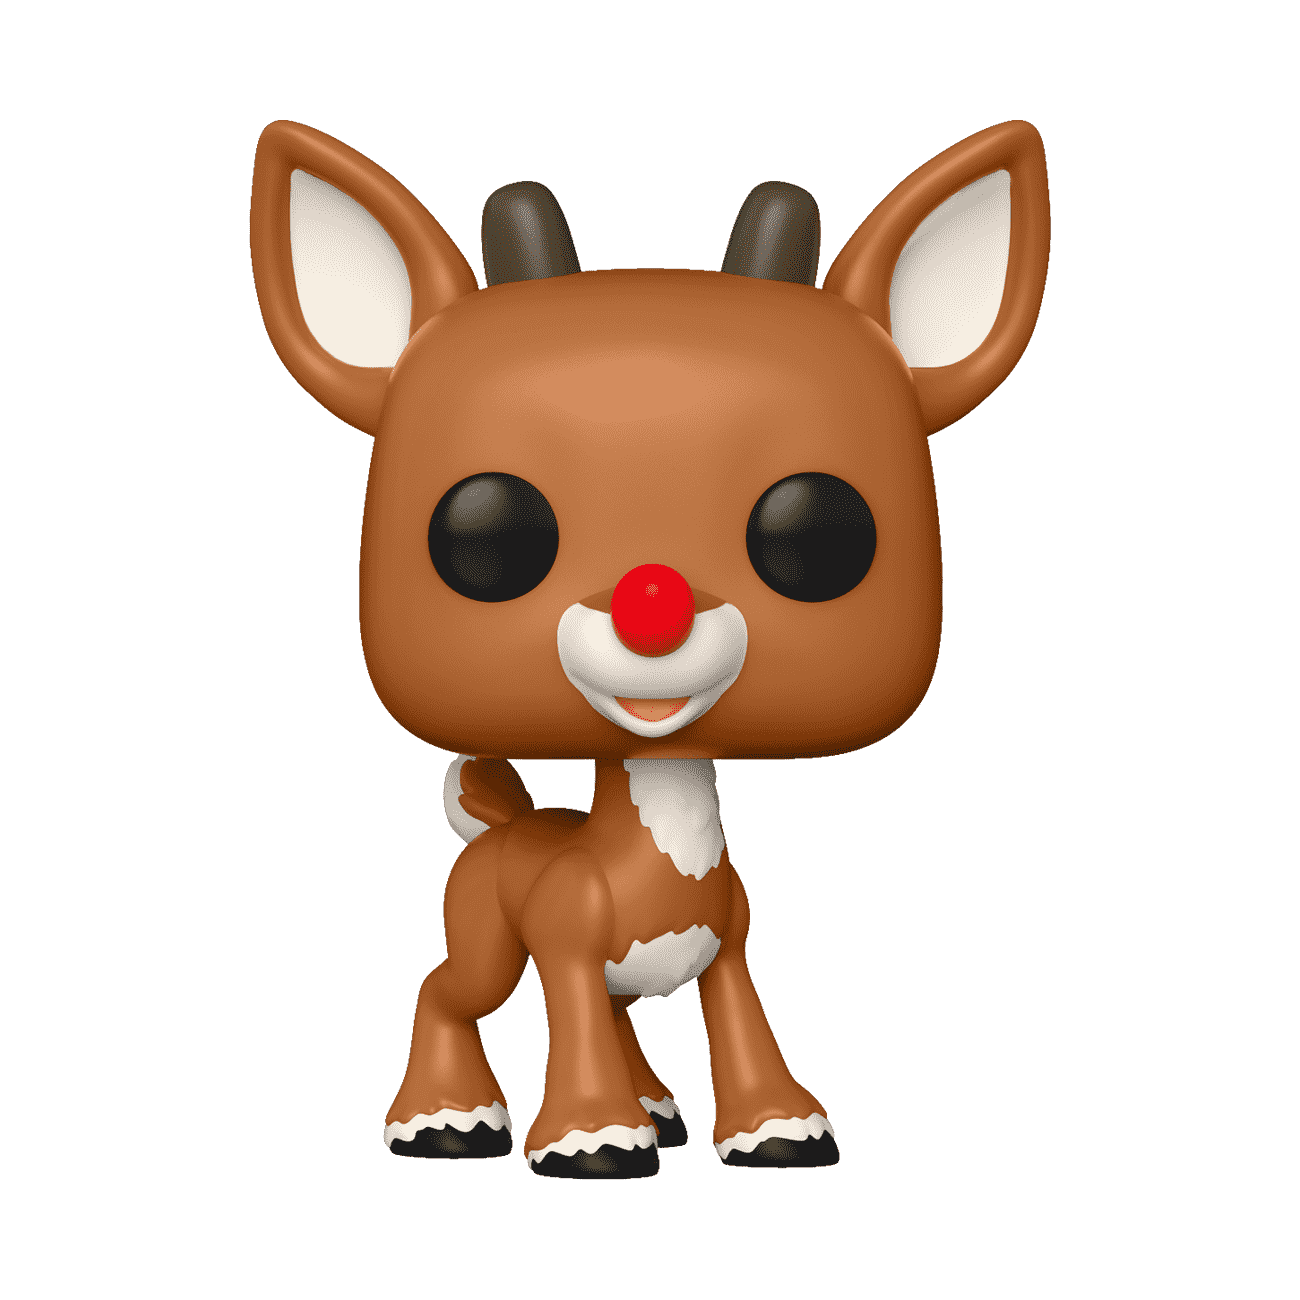 Buy Pop! Rudolph at Funko.